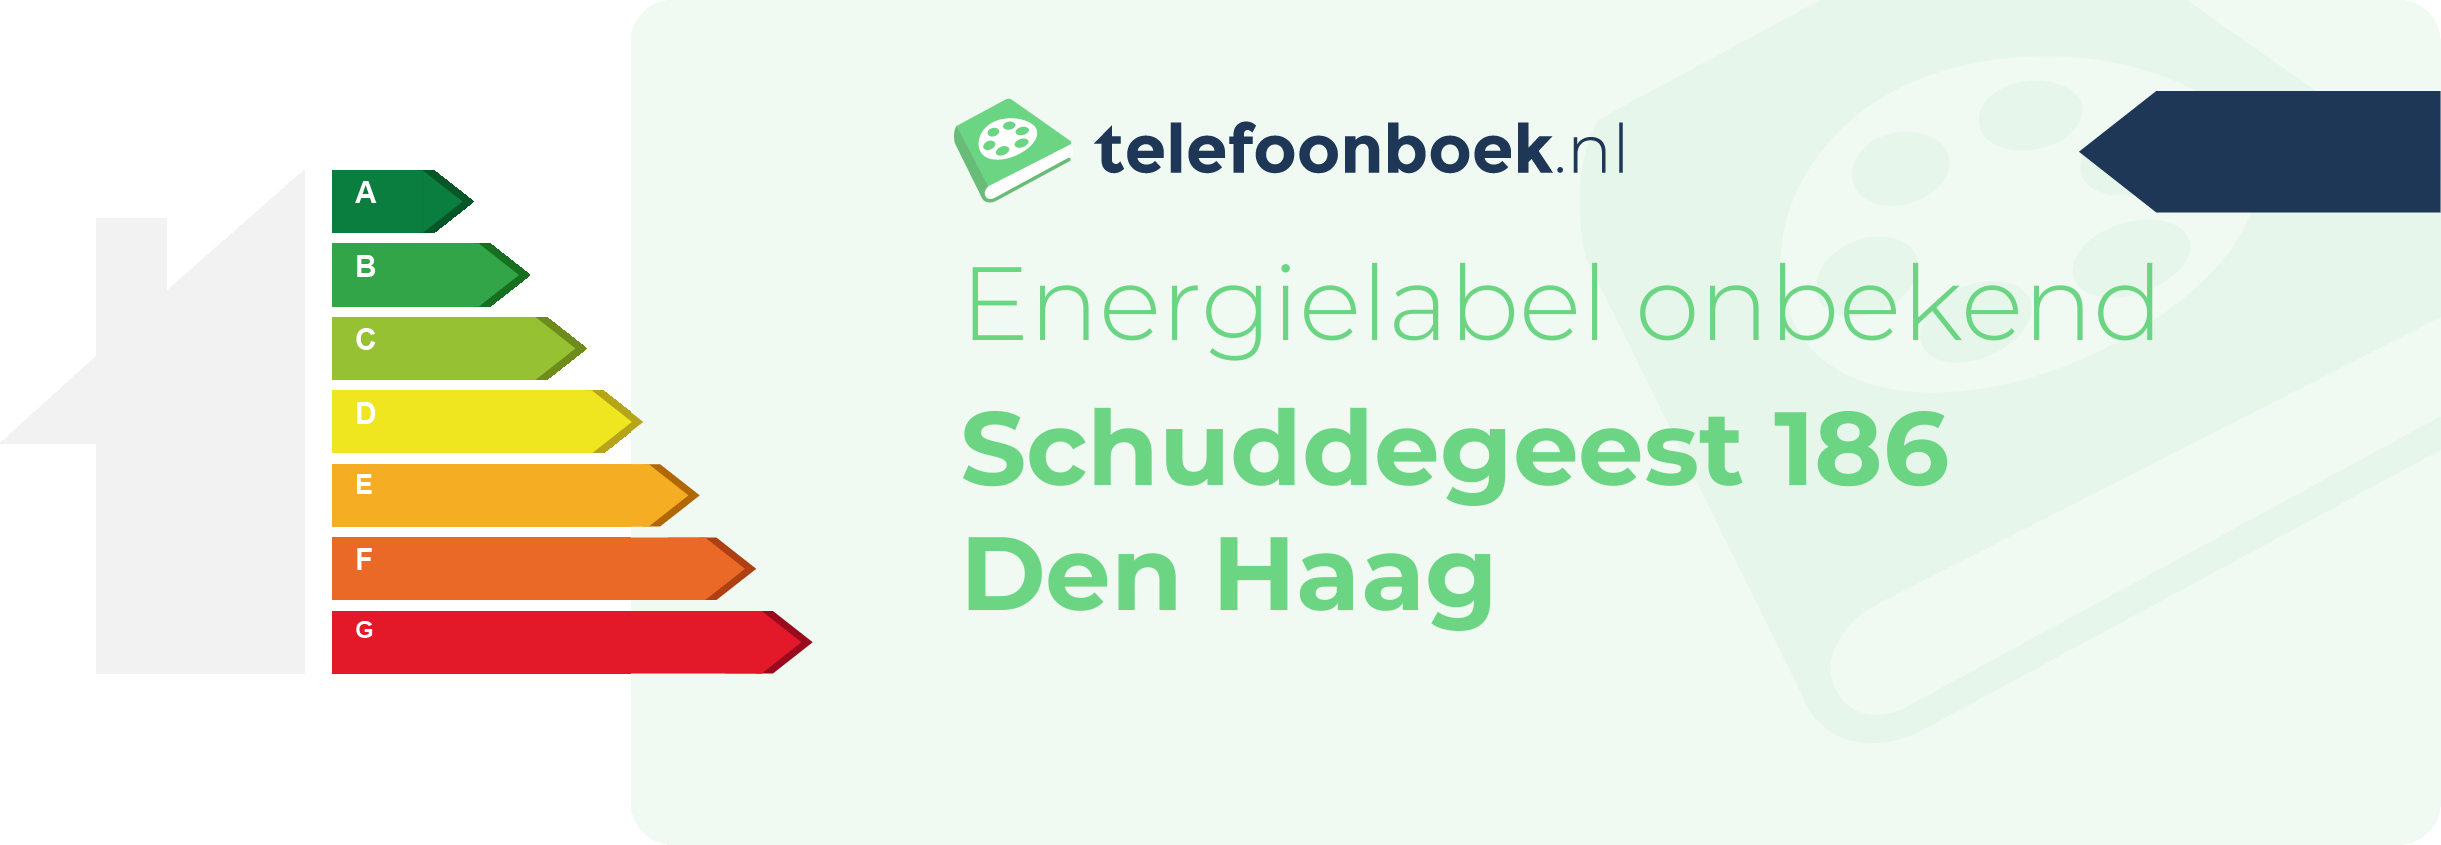 Energielabel Schuddegeest 186 Den Haag